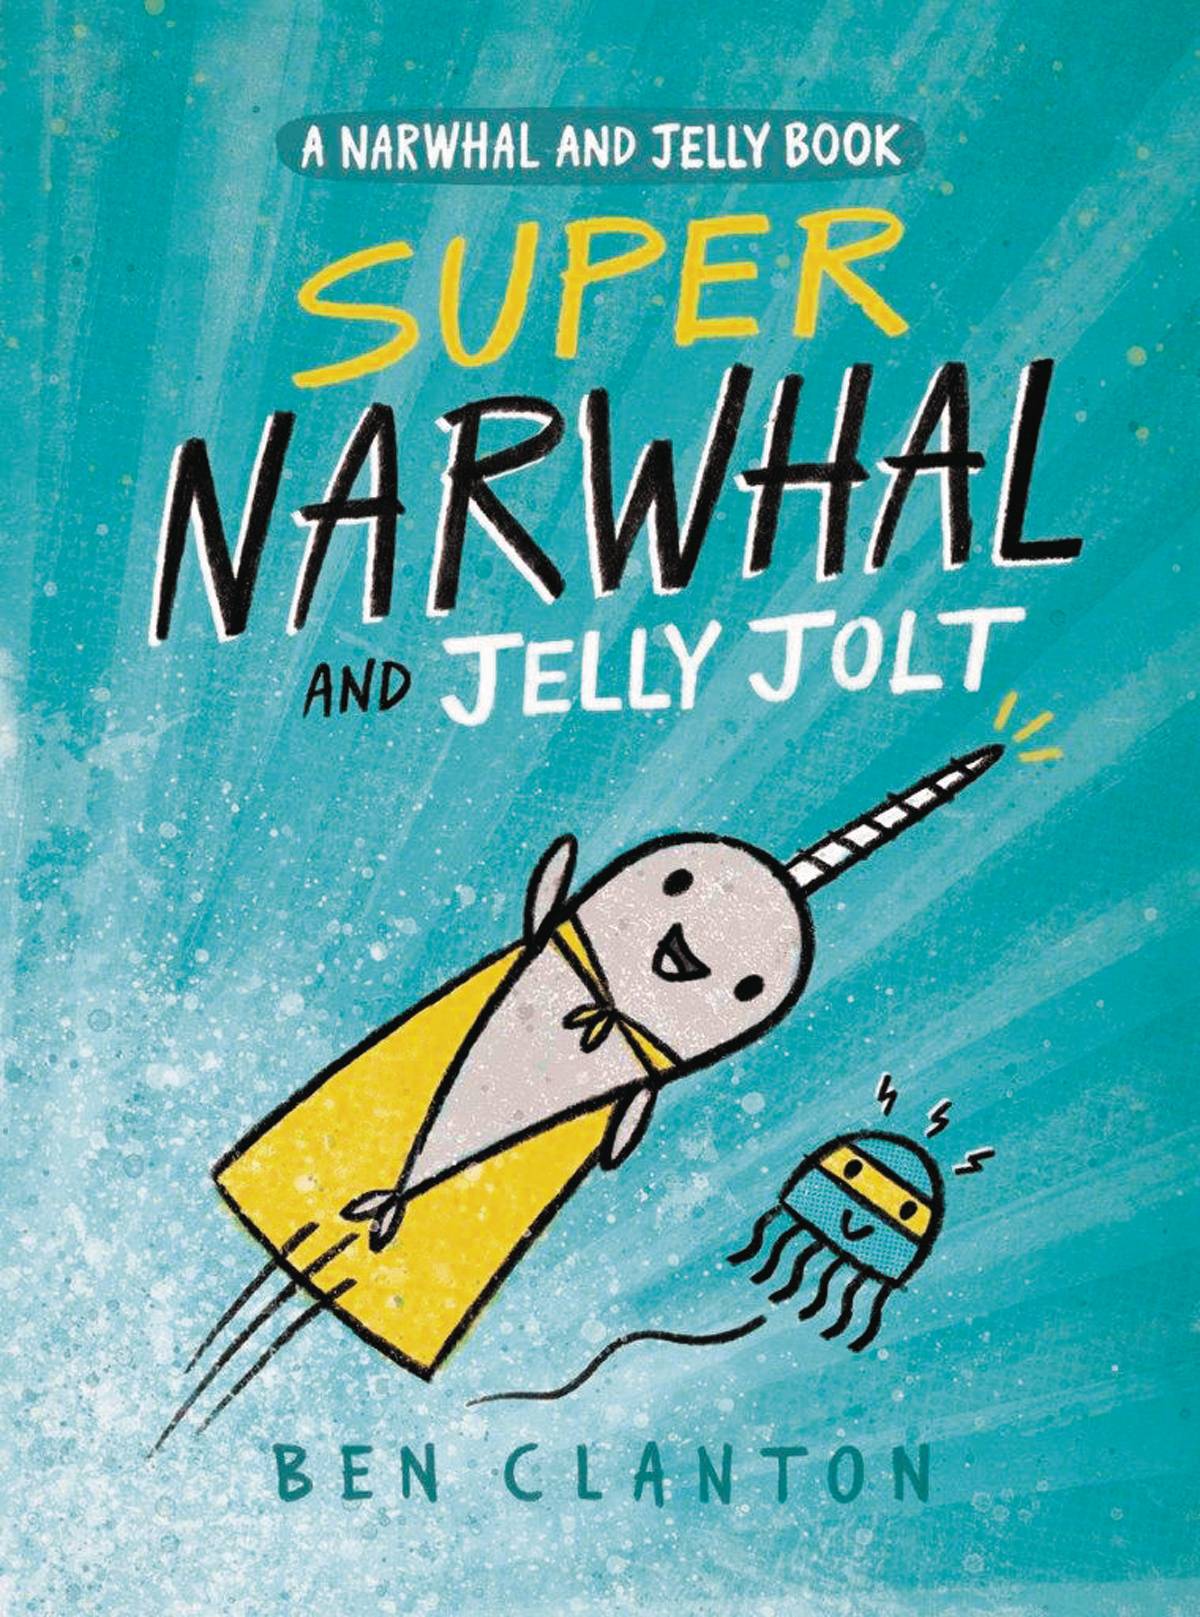 Narwhal & Jelly Hardcover Graphic Novel Volume 2 Super Narwhal & Jelly Jolt